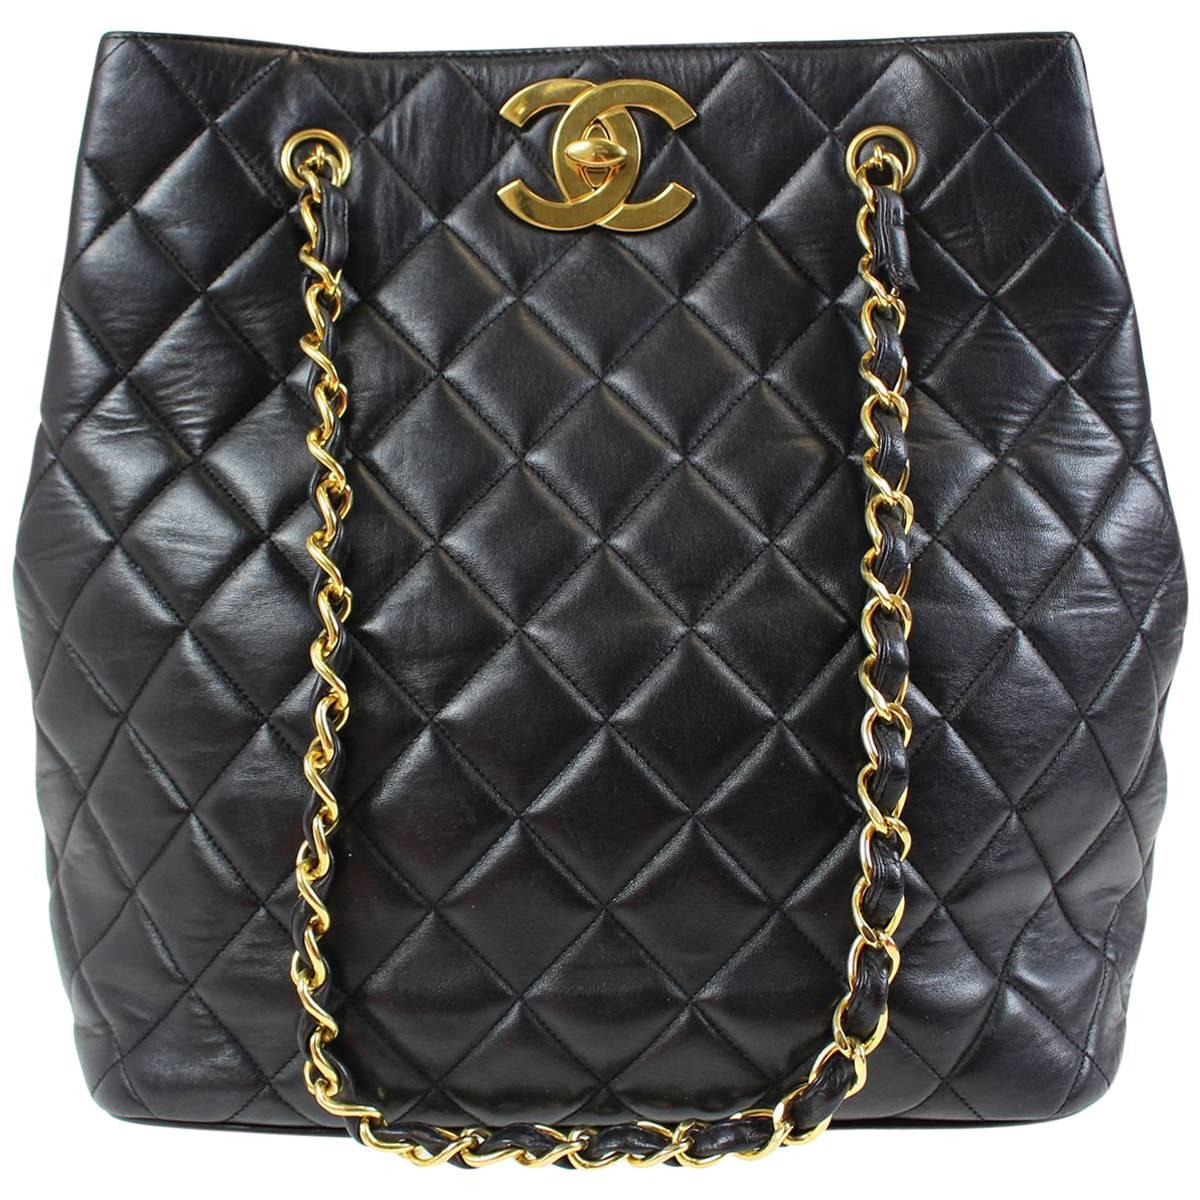 Chanel Black Lambskin Leather Gold Shopper Shoulder Carryall Tote Bag in Box